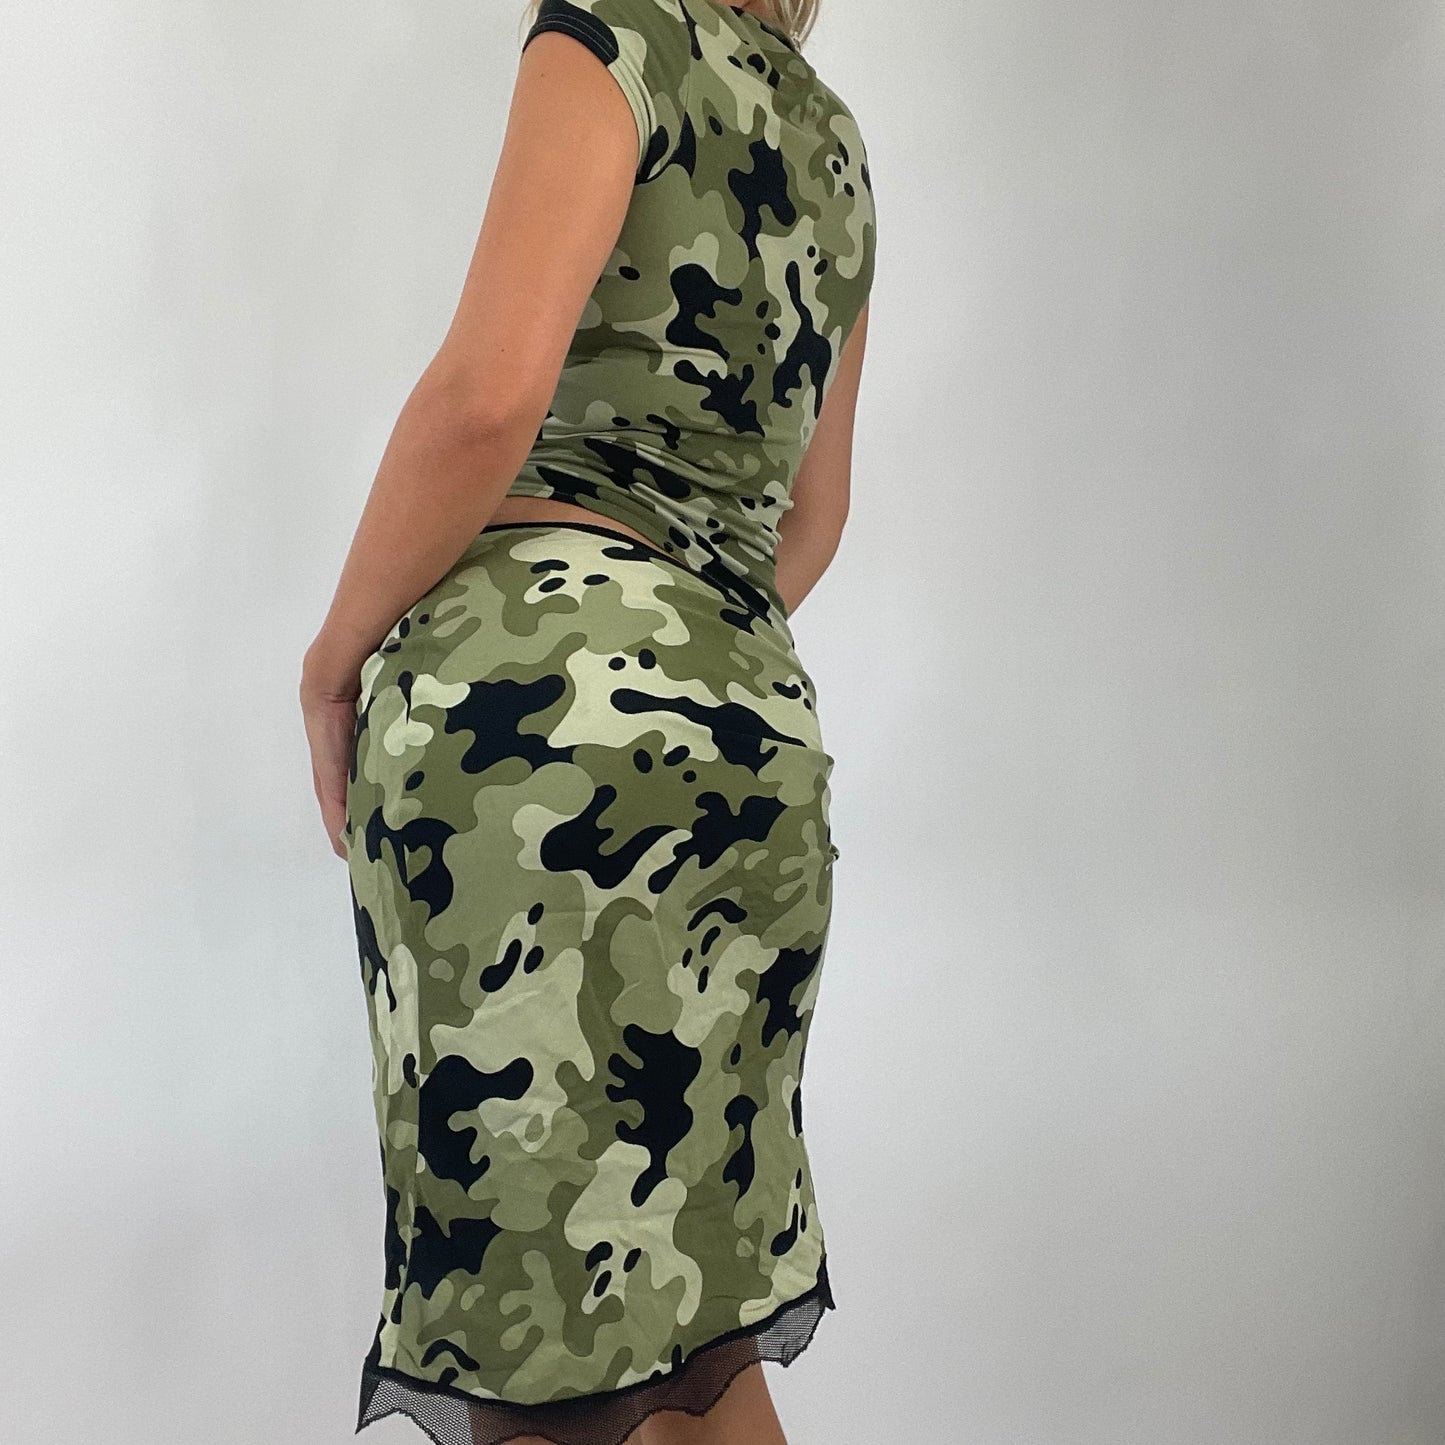 💻 DROP 2 | small camo print army print morgan de toi set - top and skirt